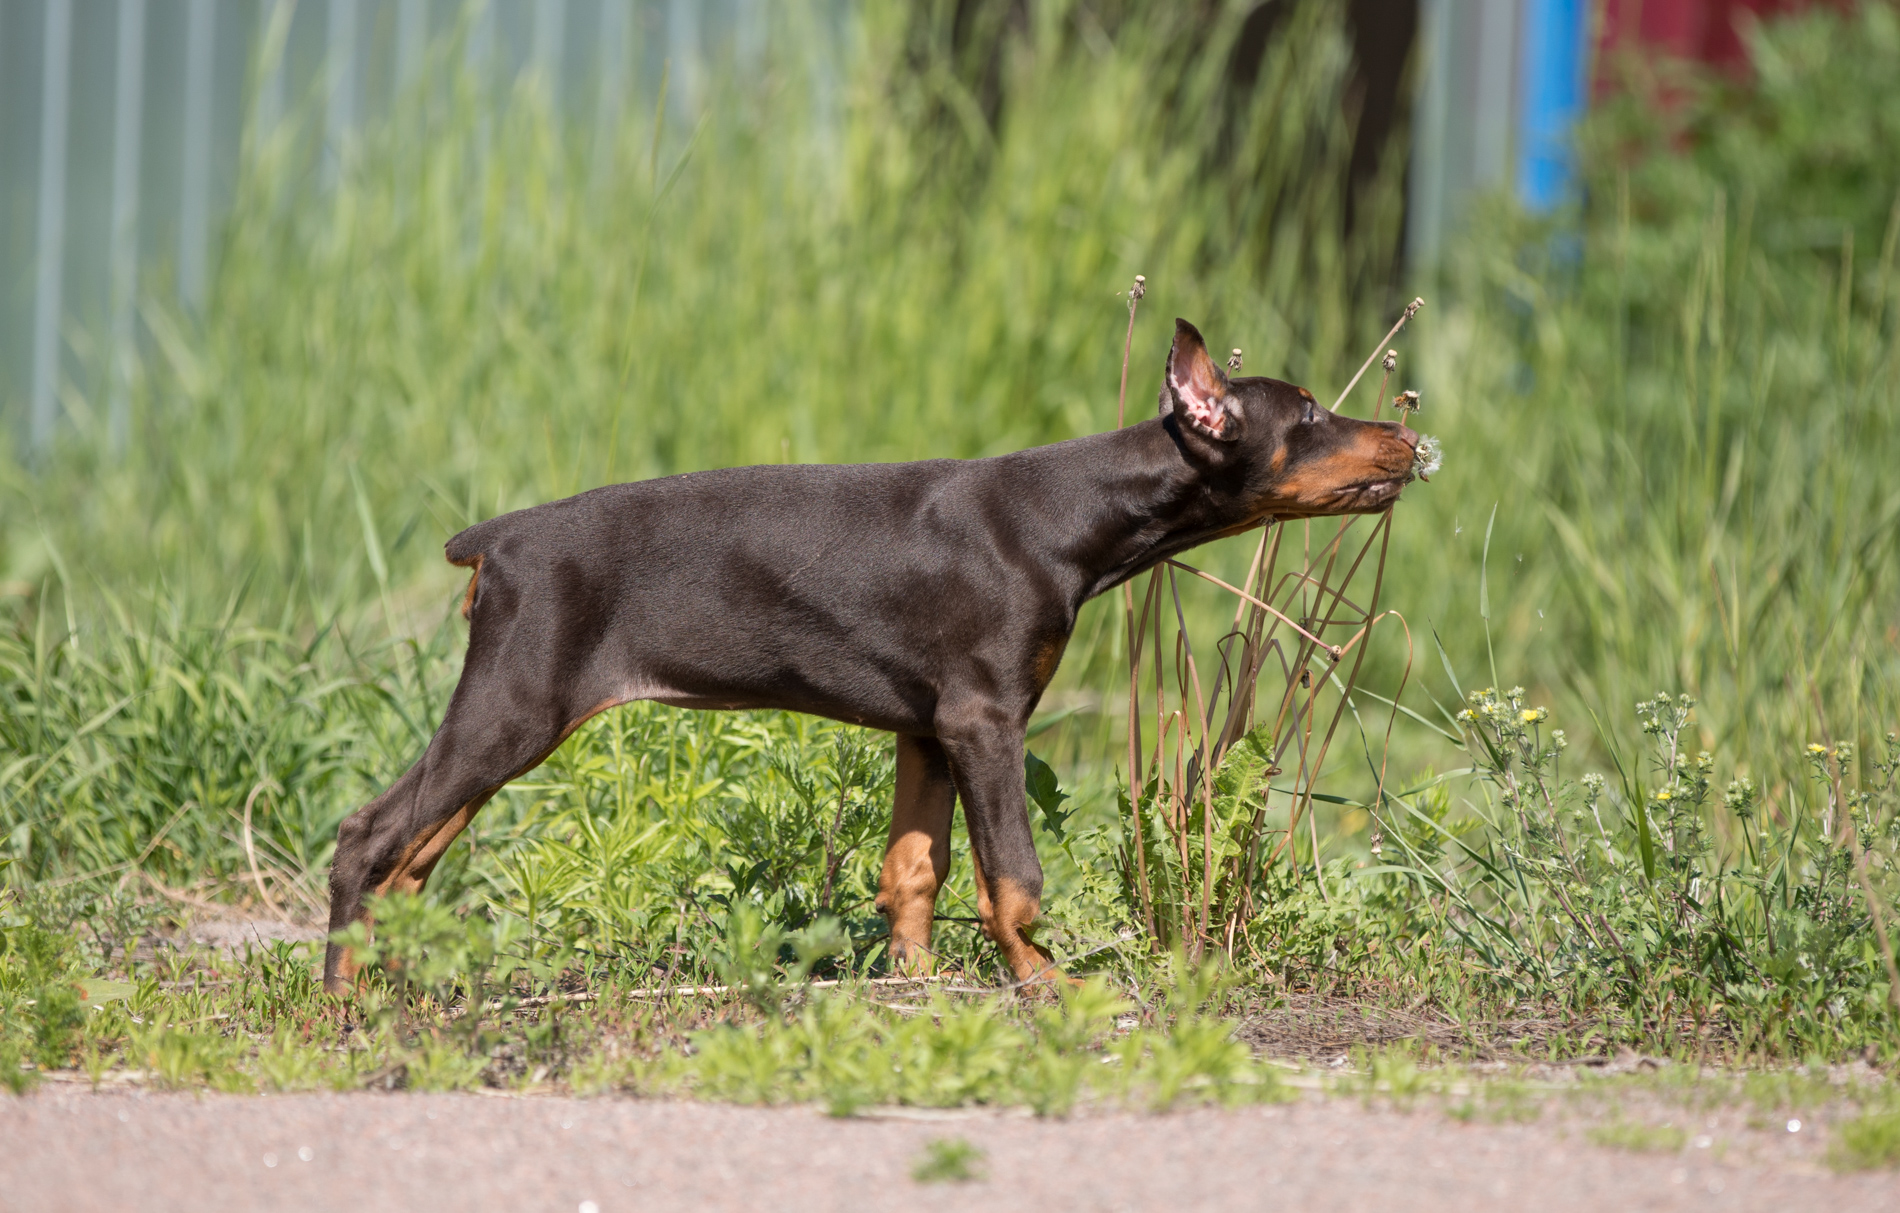 Dobermann puppy: A litter = Pride Of Russia Prokhor x Louisa iz Korolevstva D'Allba